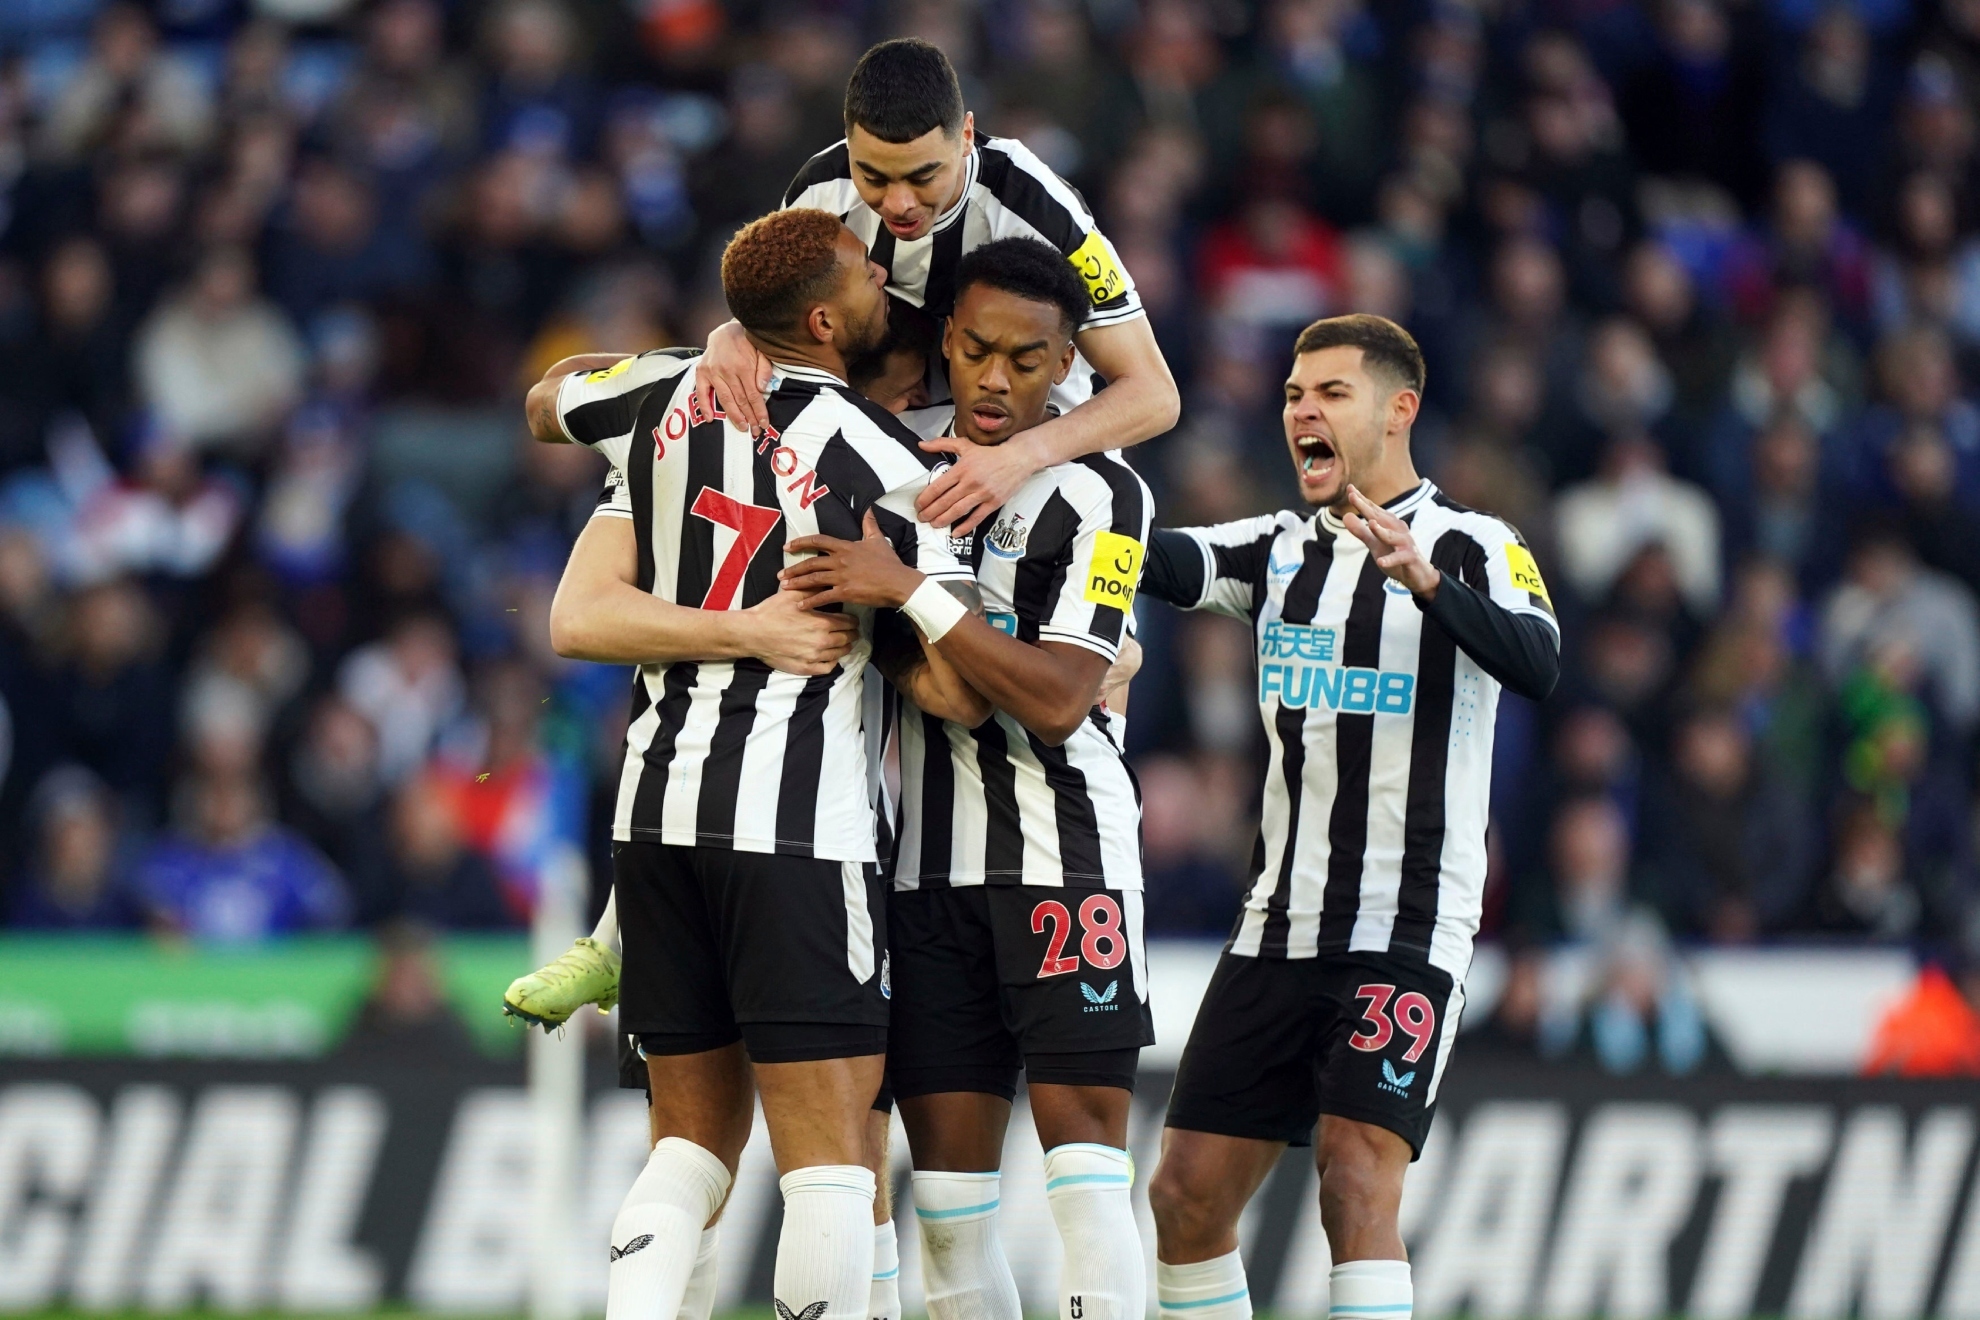 Newcastle celebrate a goal